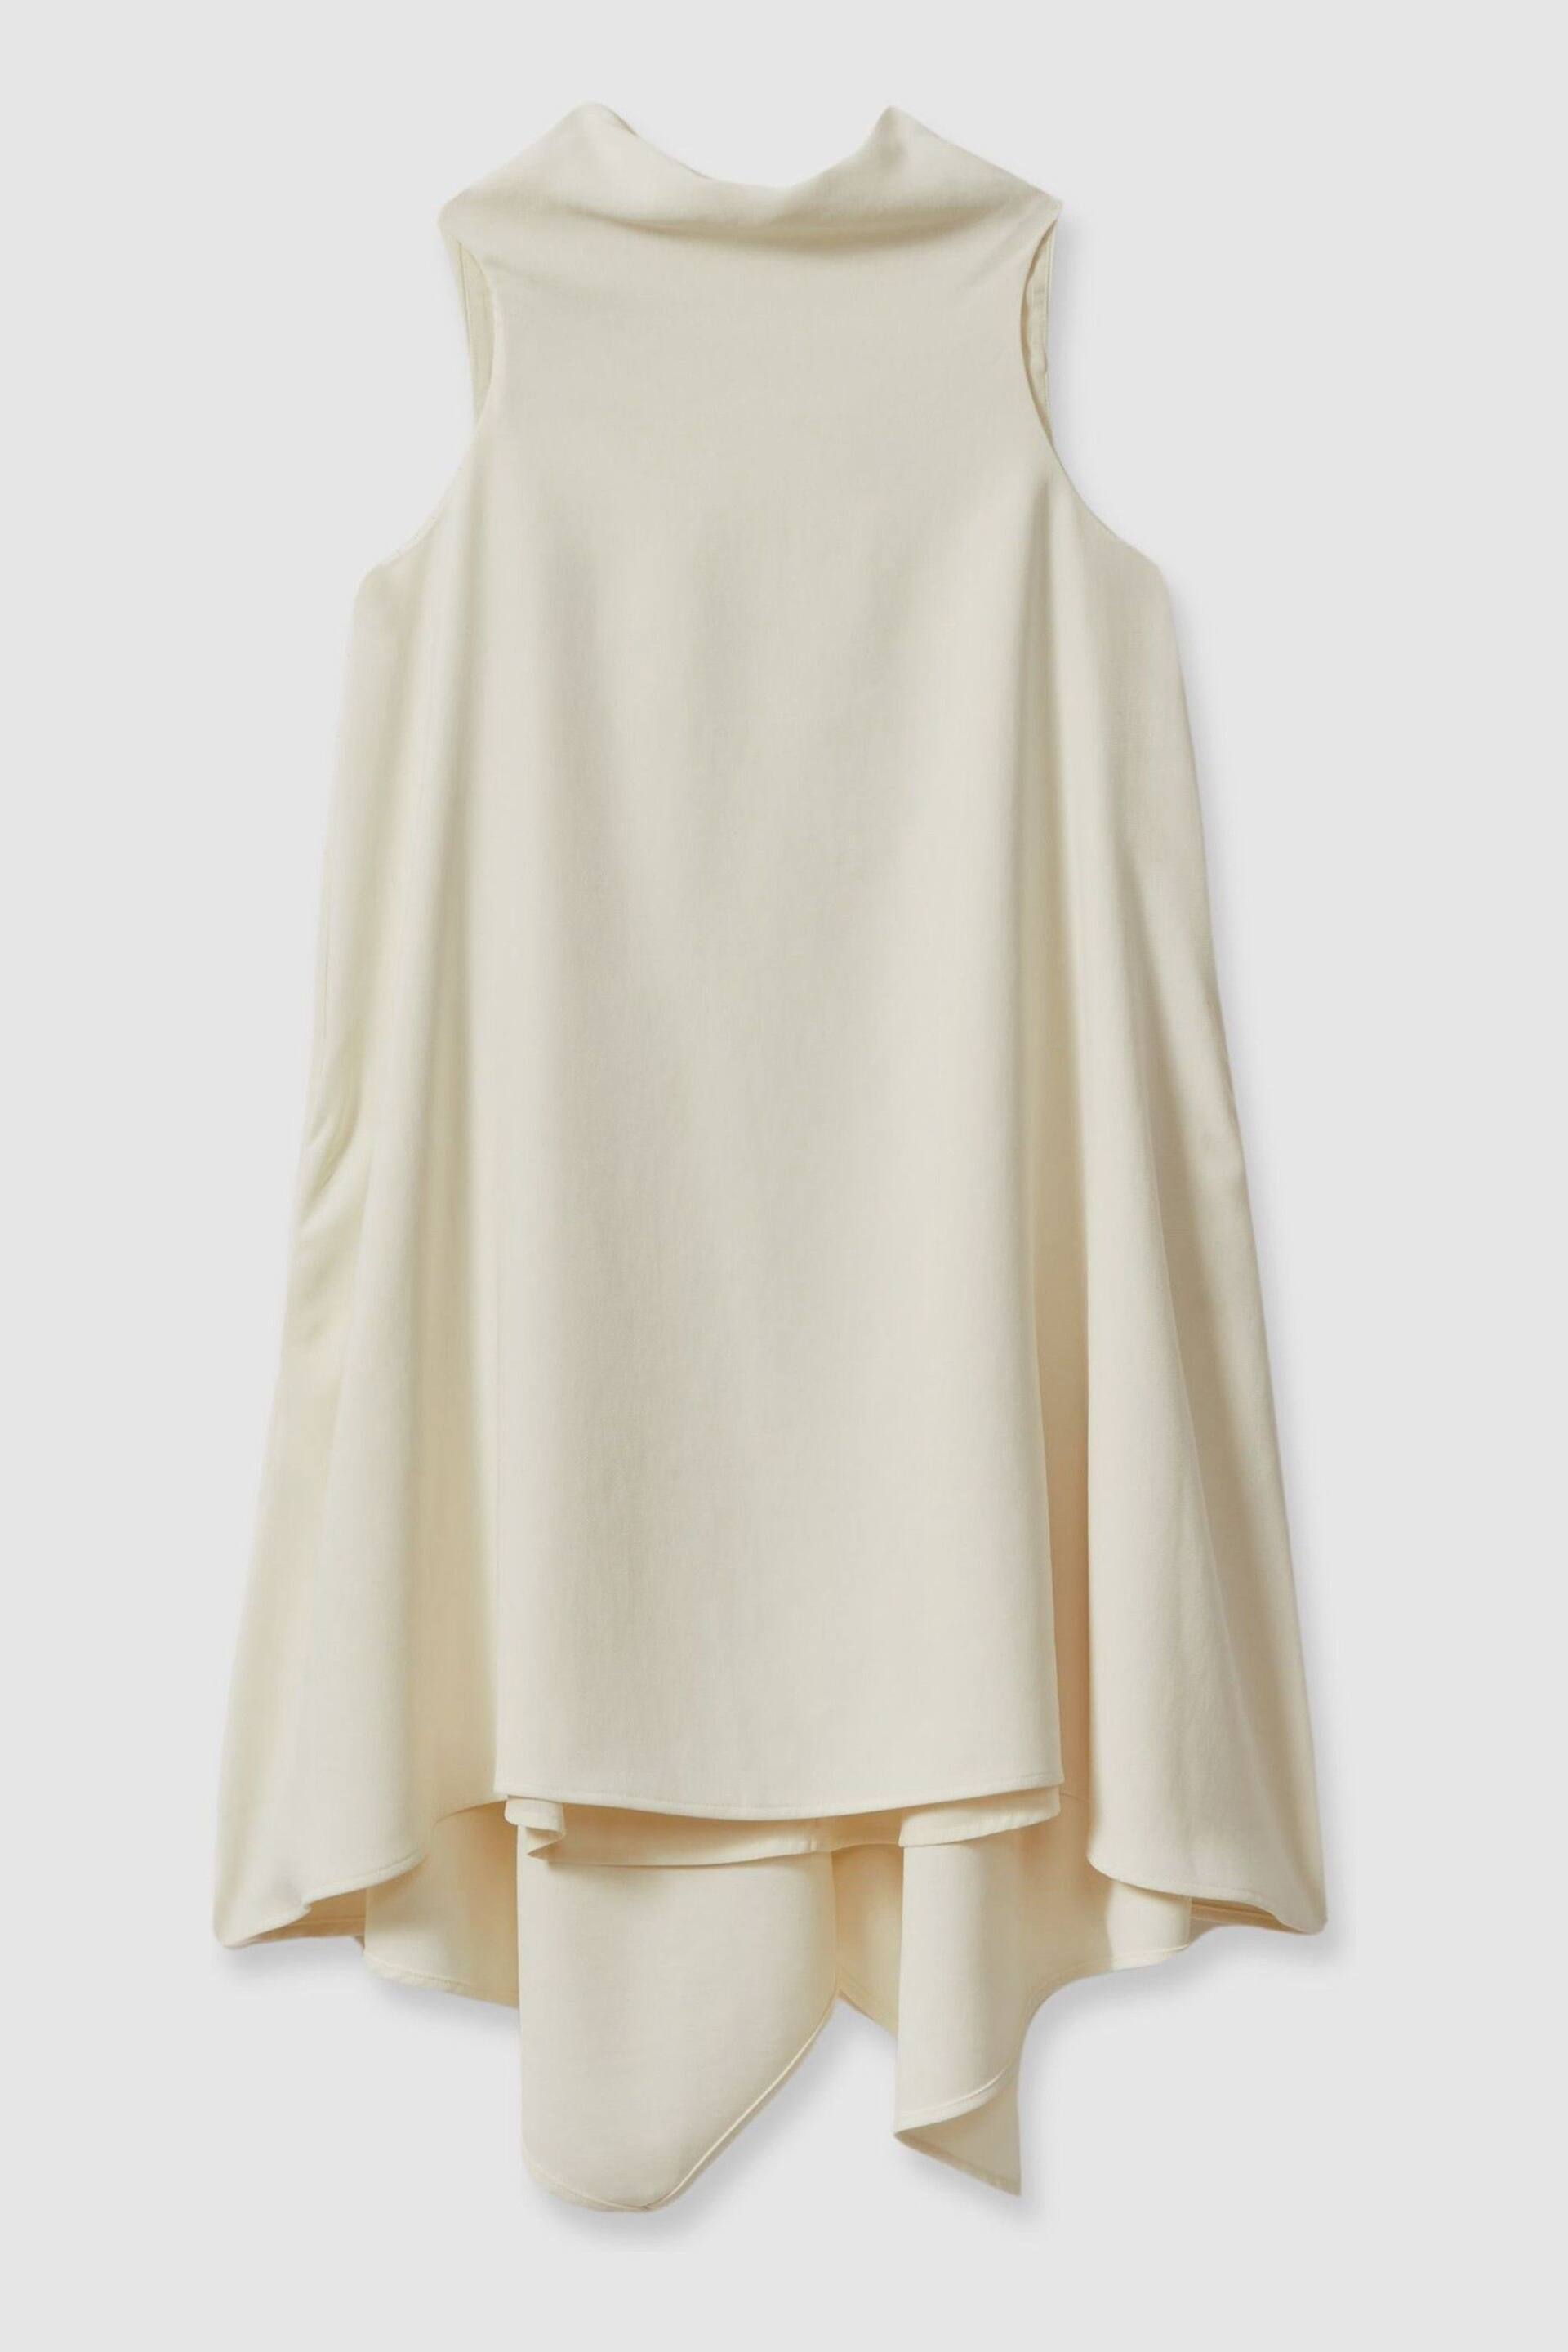 Reiss Ivory Shauna High-Neck Drape Back Mini Dress - Image 2 of 6